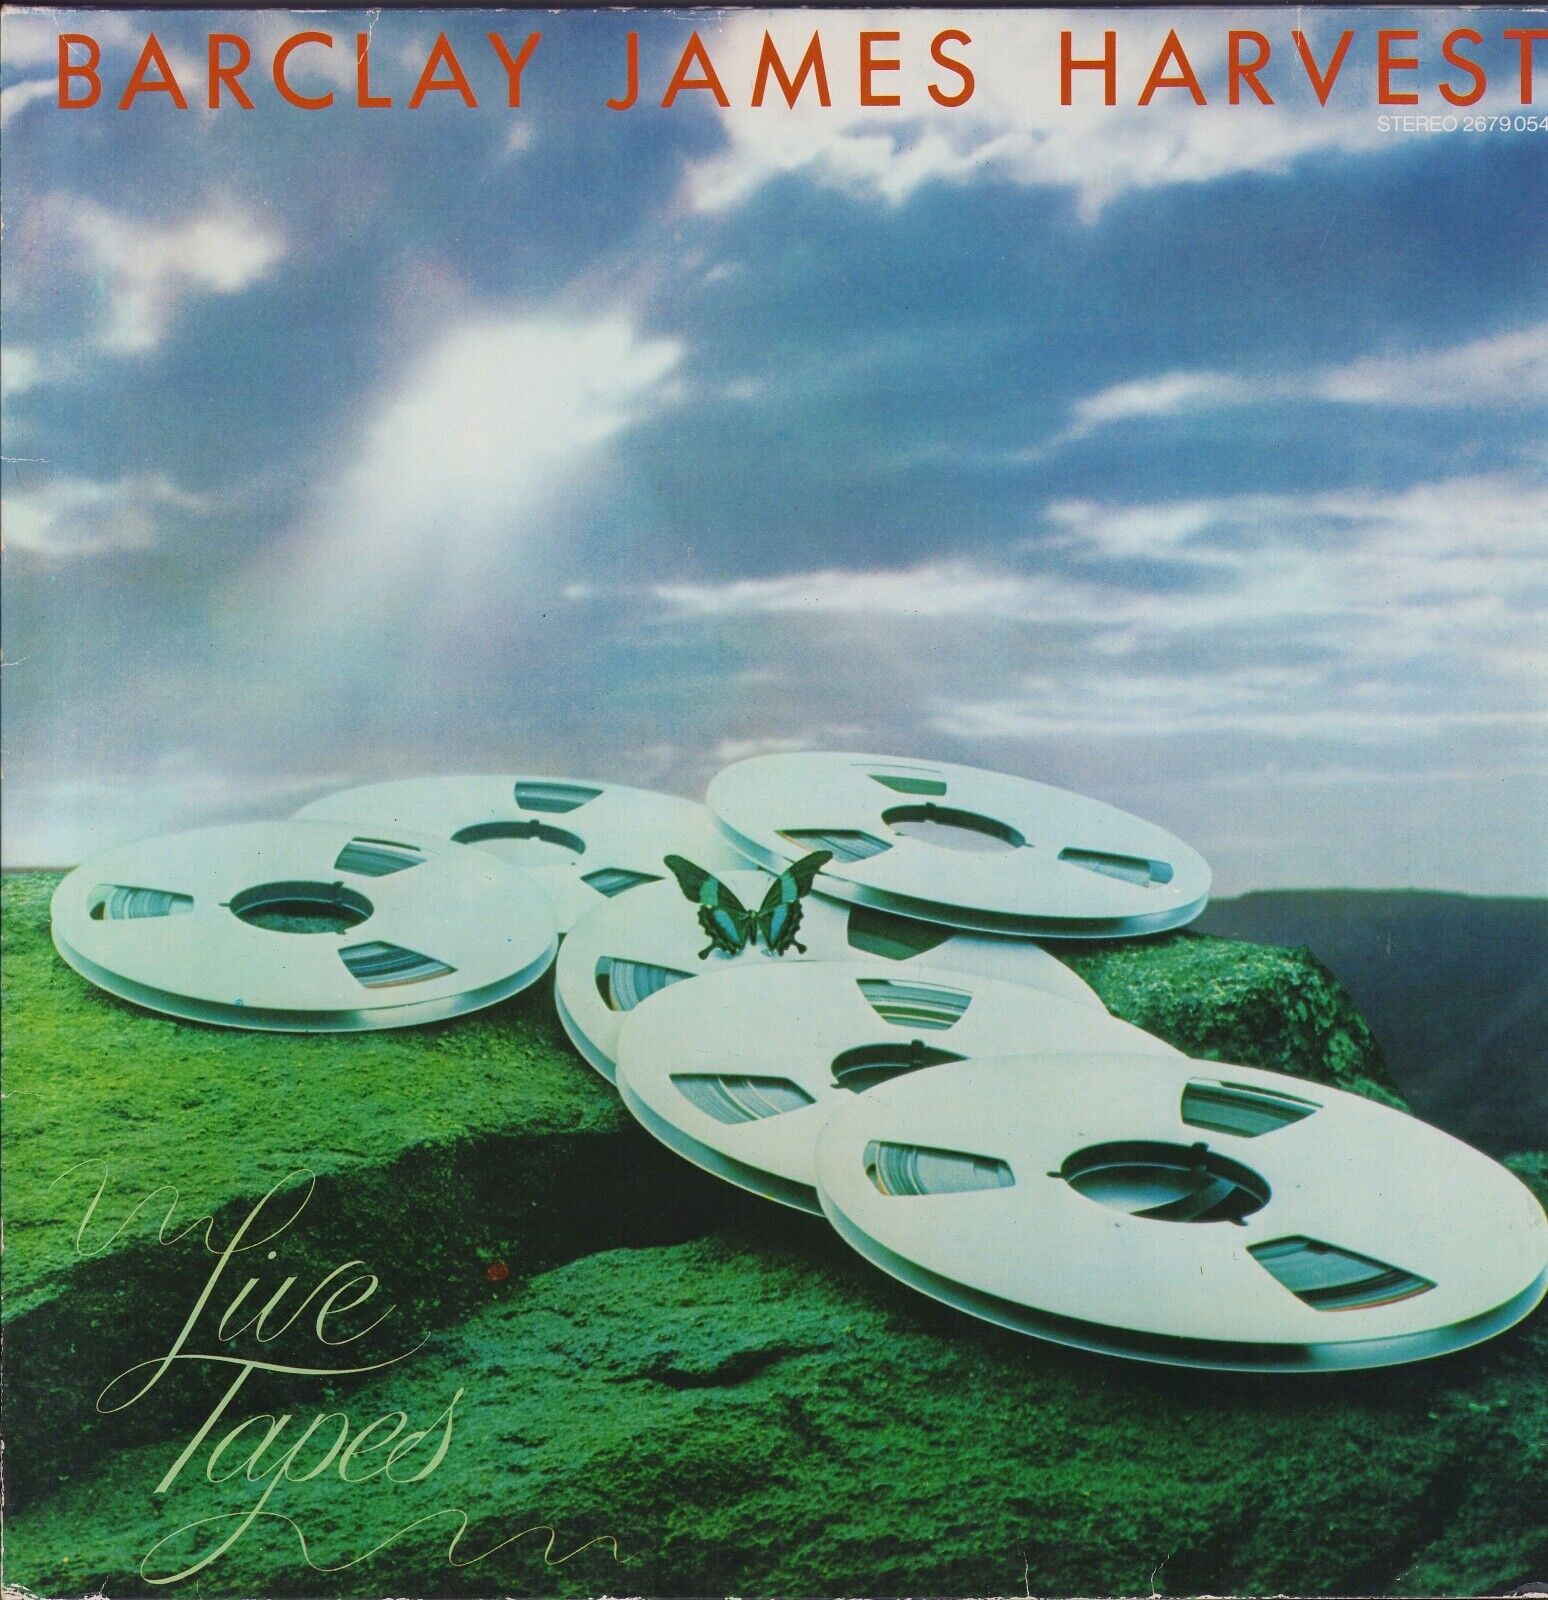 Barclay James Harvest - Live Tapes Vinyl 2LP